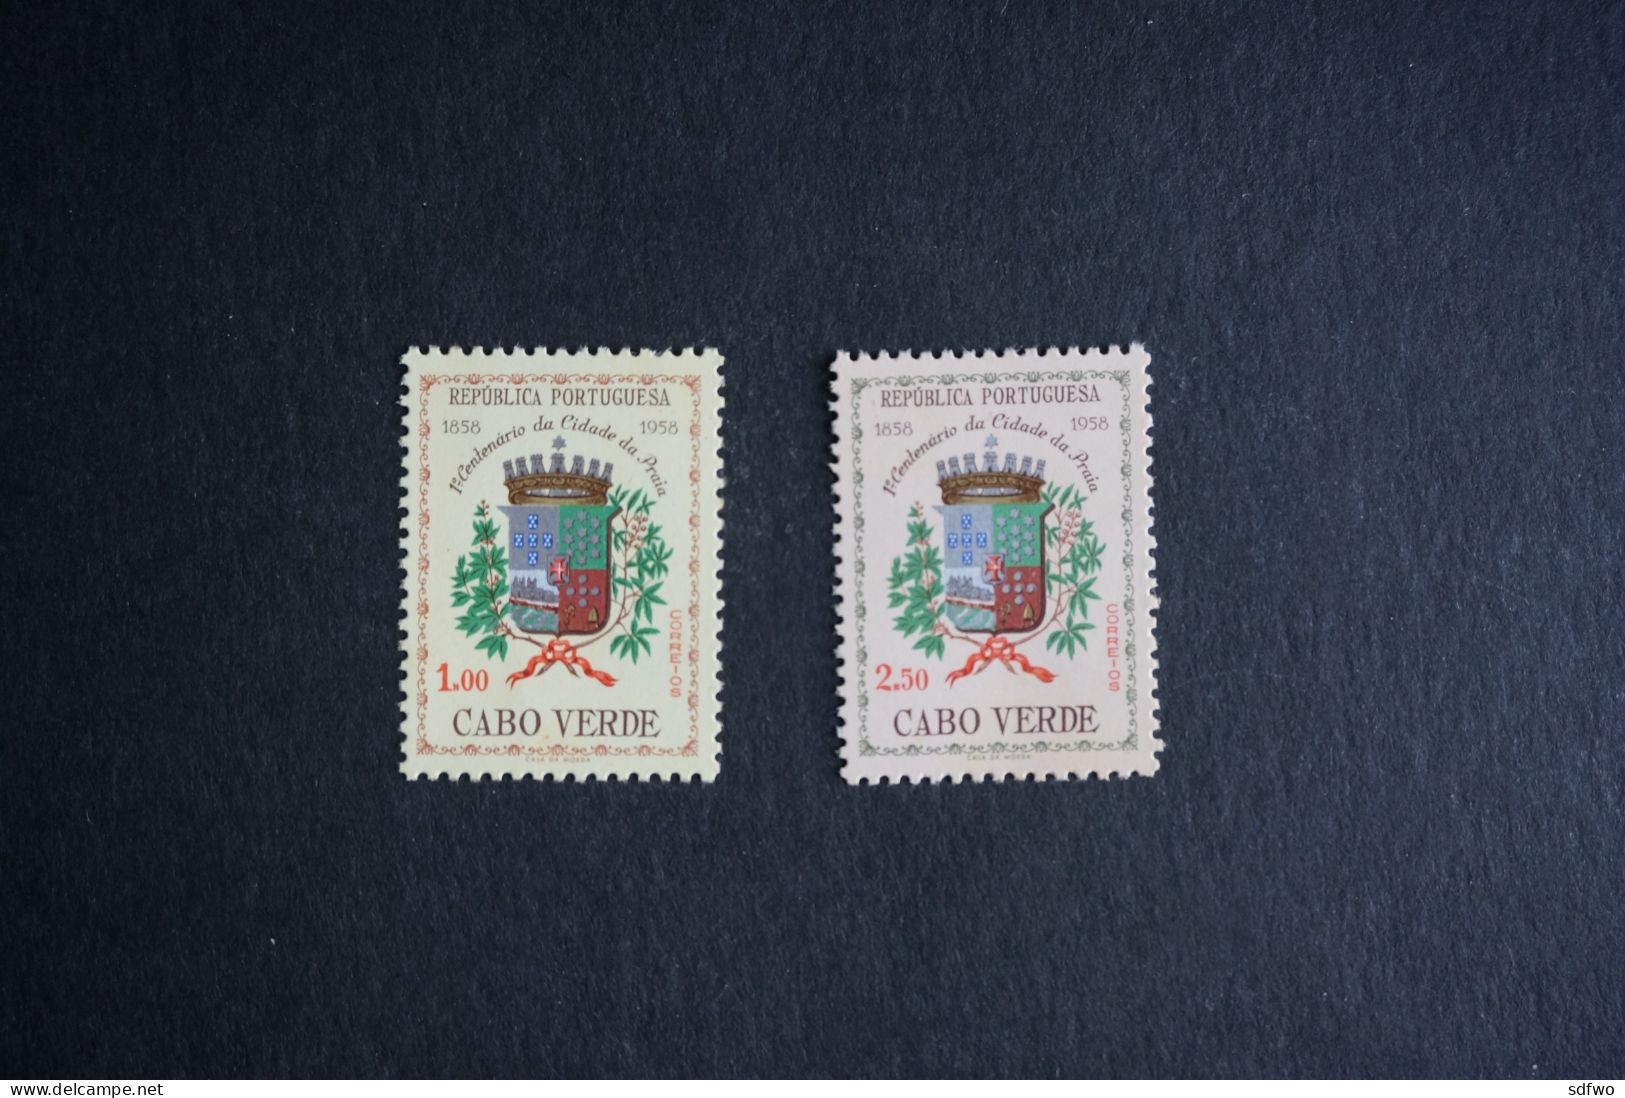 (T2) Cape Verde Cabo Verde 1958 PRAIA CITY Complete Set - Af. 284/ 285 (MH) - Cape Verde